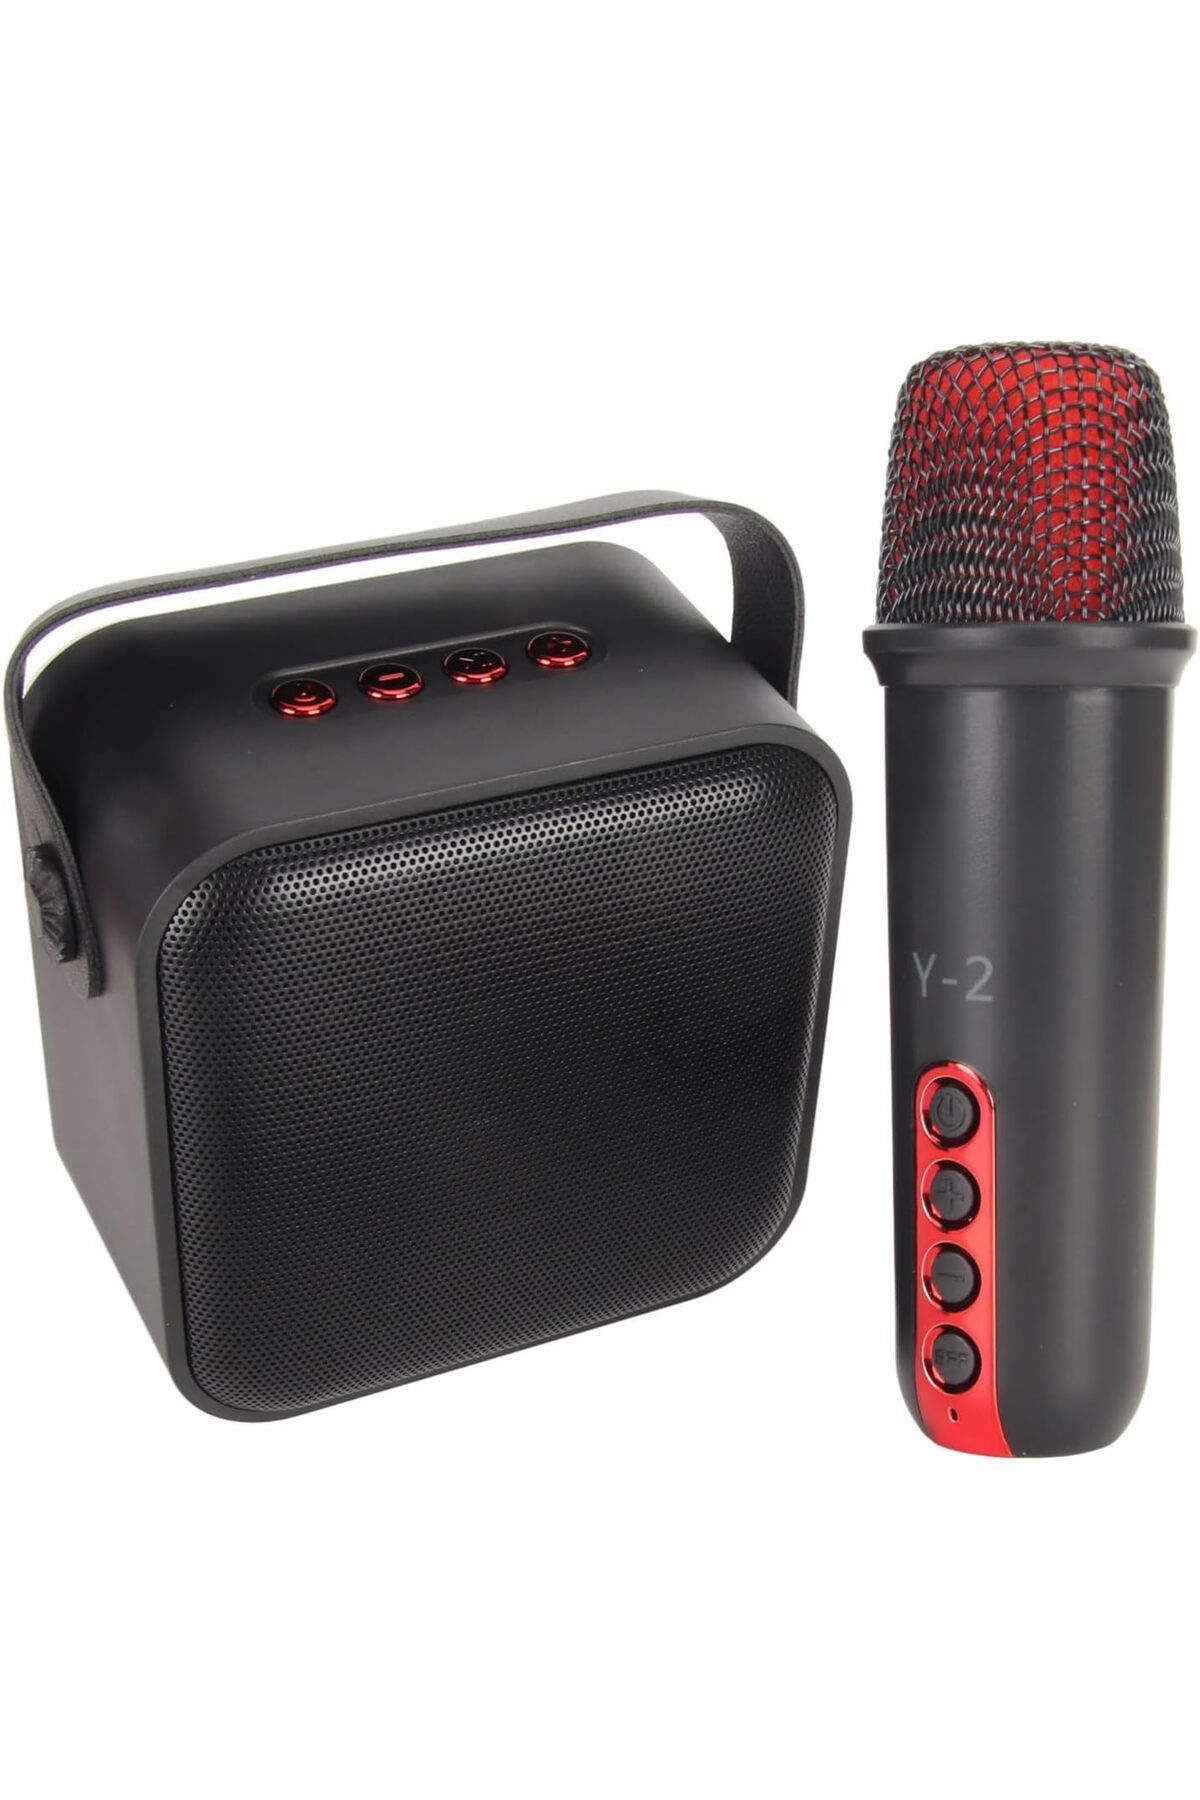 Coverzone Kablosuz Mikrofonlu Karaoke Makinesi Taşınabilir Bluetooth Hoparlör Seti Y2 10 x 10 x 6 cm